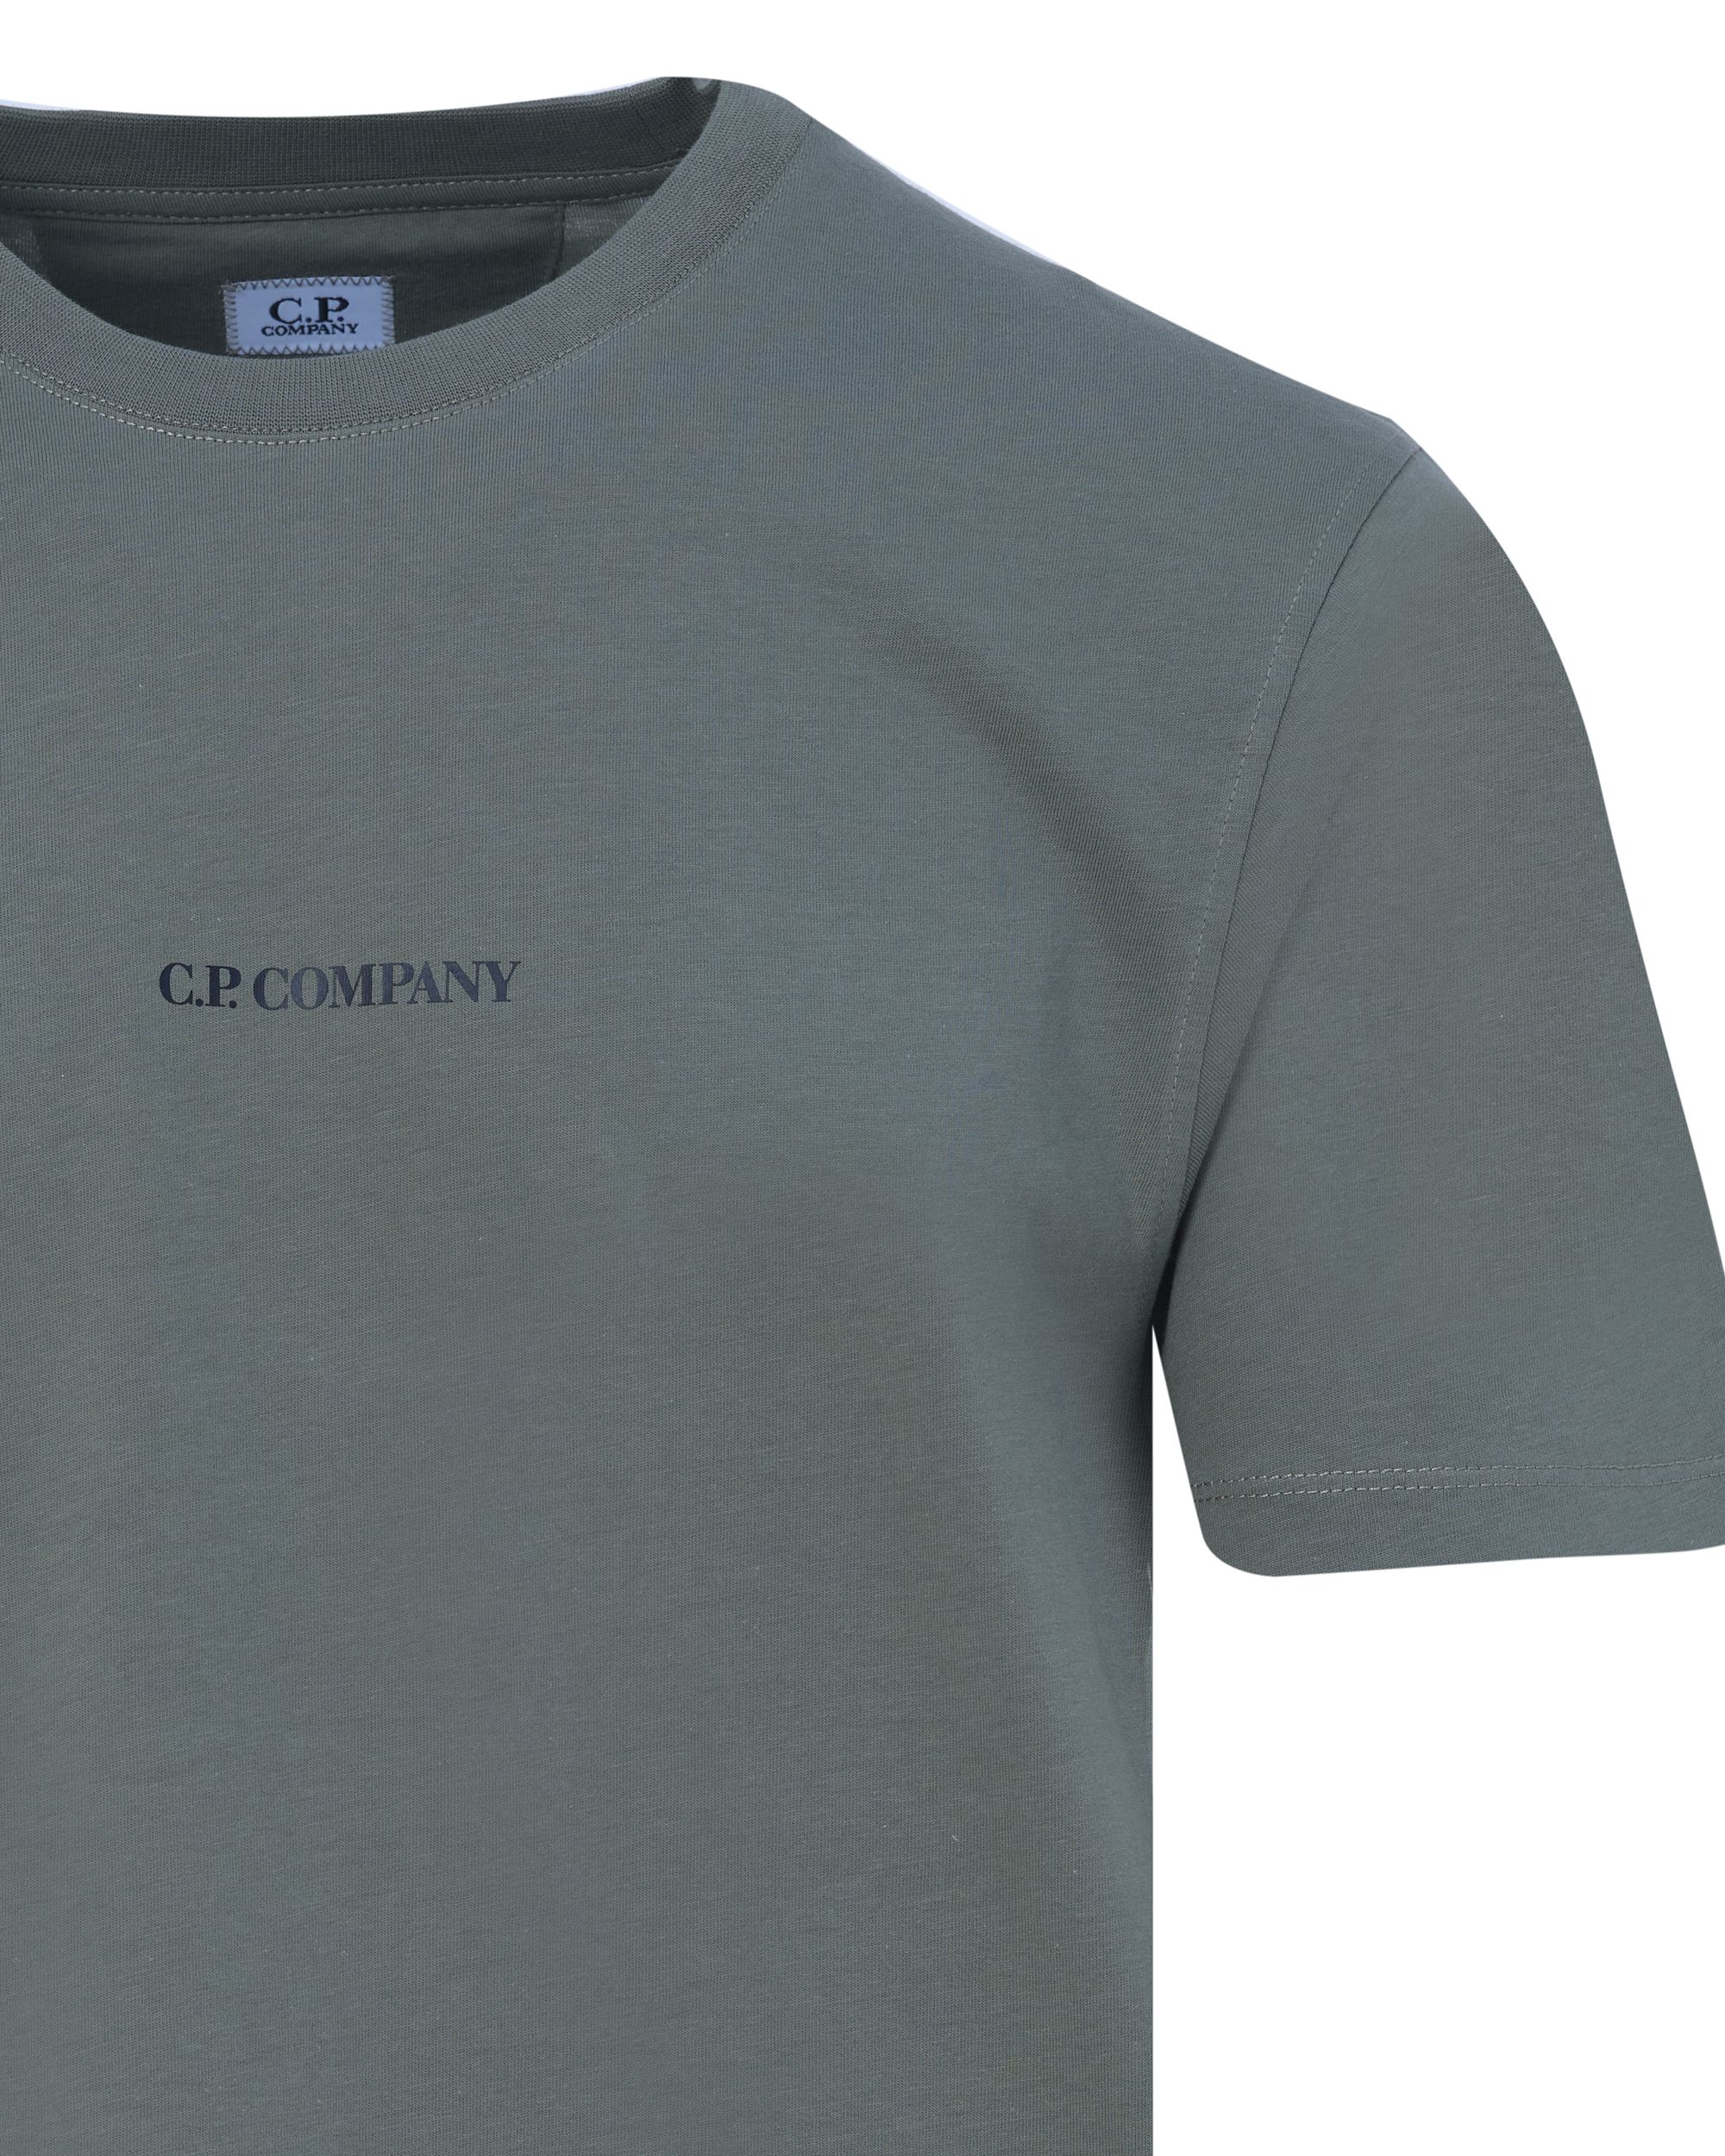 C.P Company T-shirt KM Groen 082108-001-L